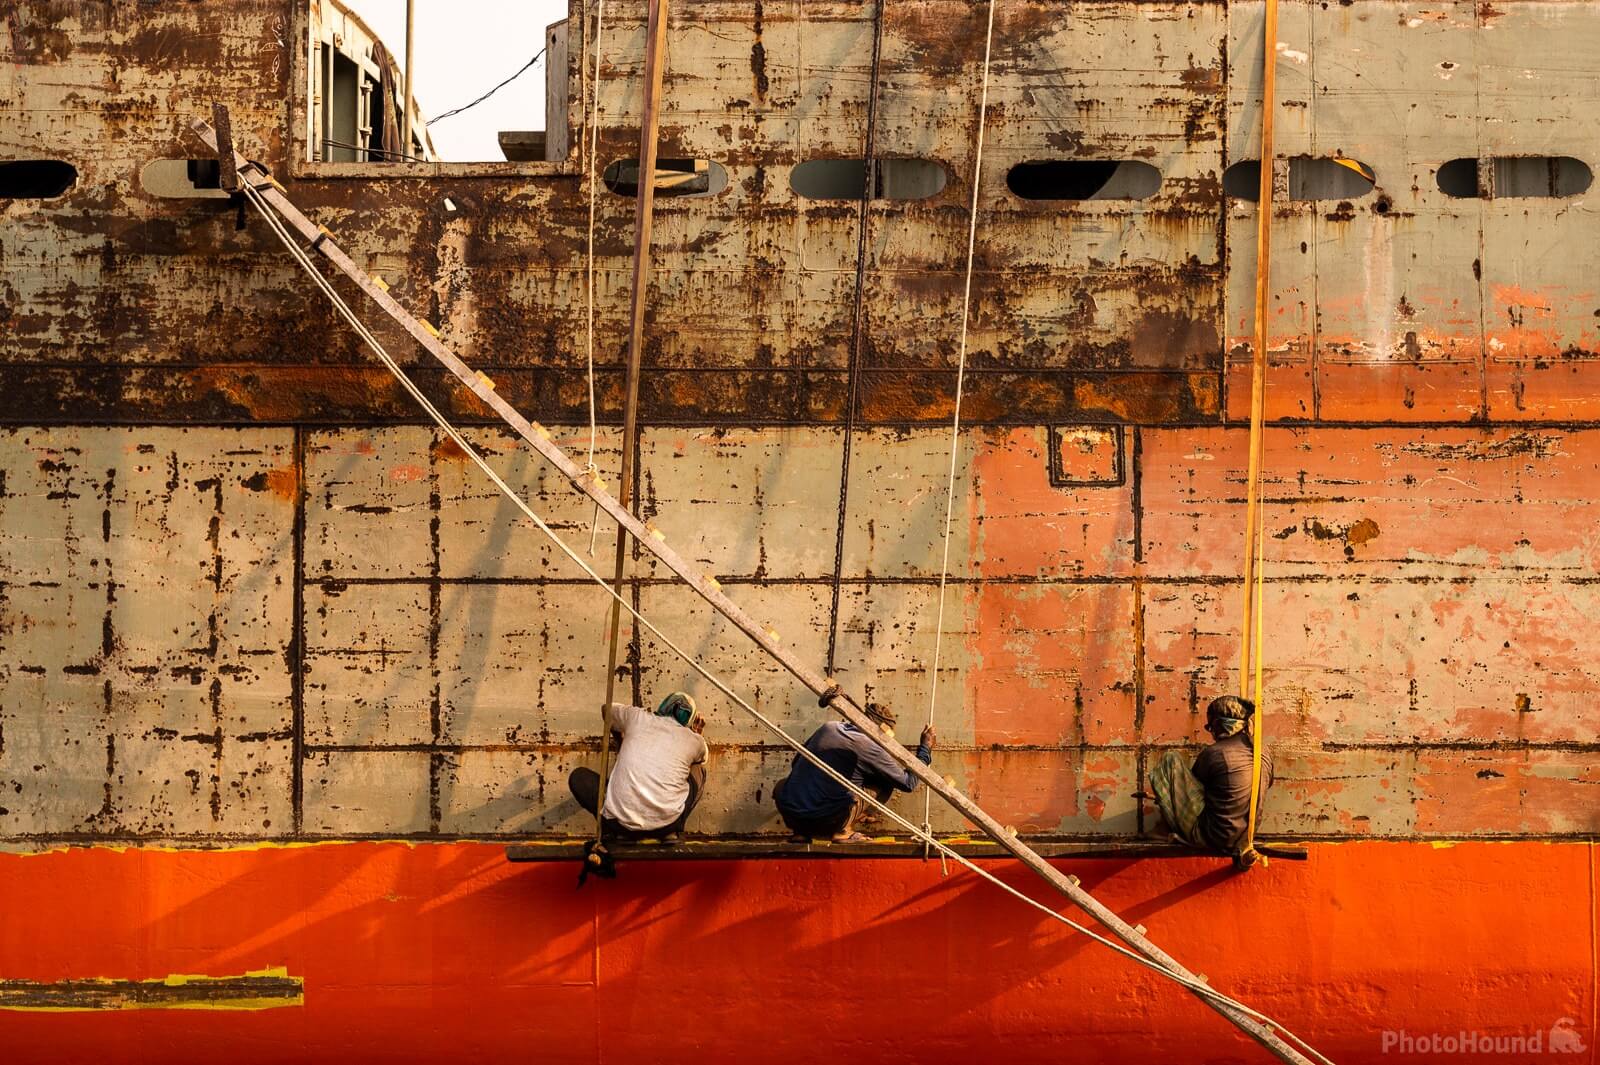 Image of Old Dhaka shipyard by Juraj Zimányi